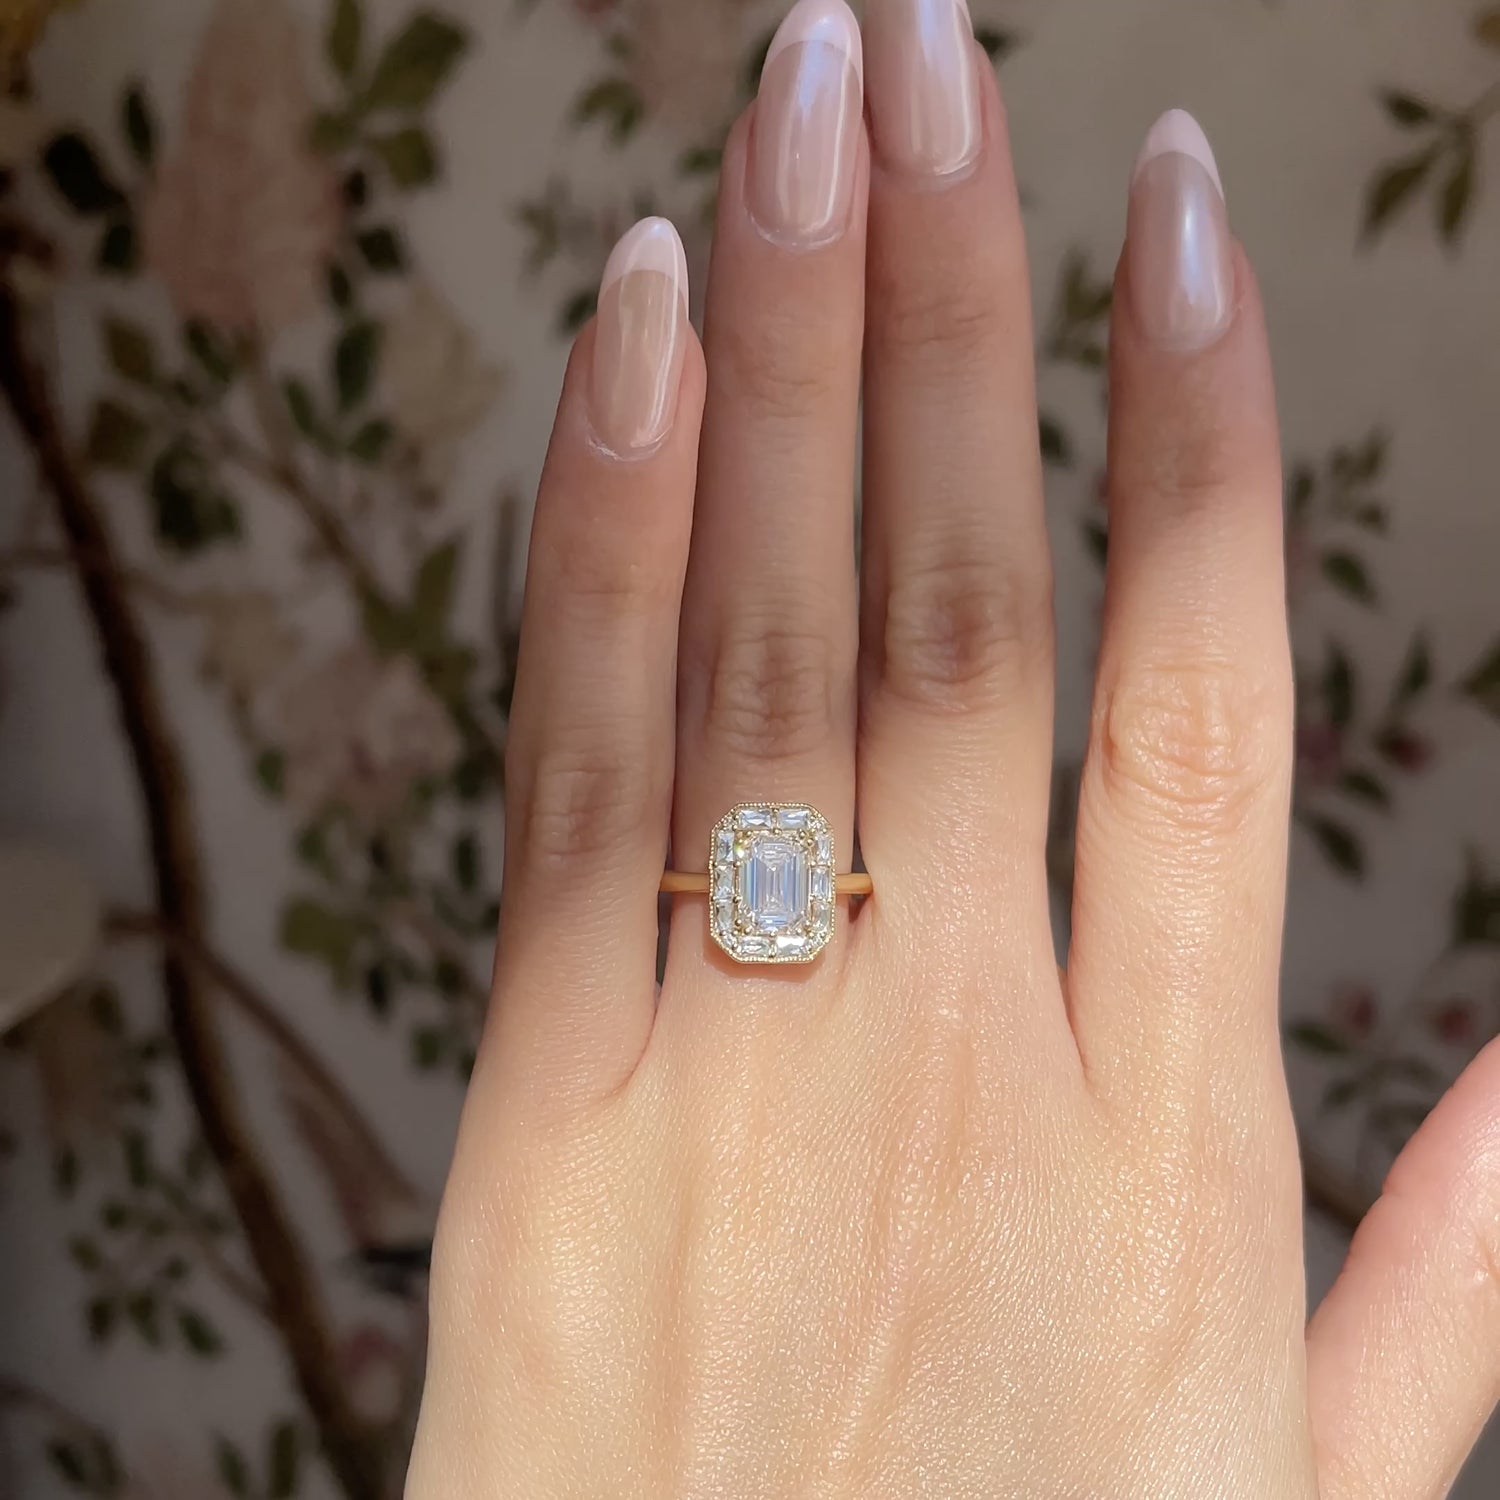 2 cttw Halo Princess Square Cut Diamond Engagement Ring 14k White Gold